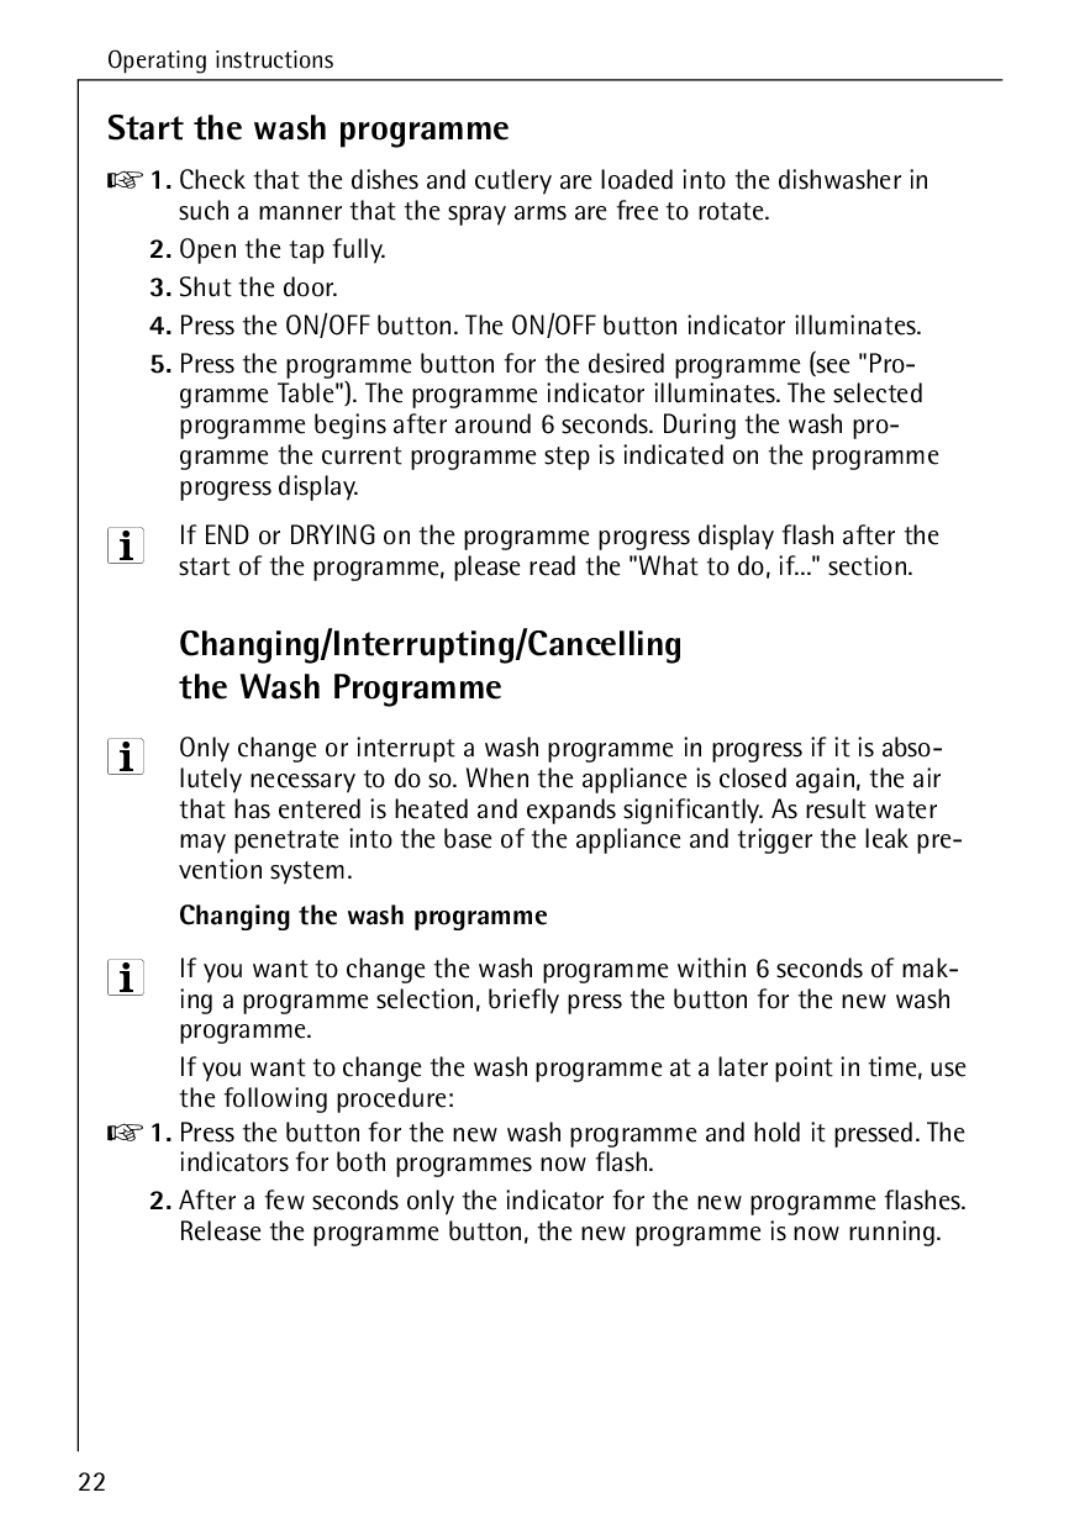 AEG 4070 manual Start the wash programme, Changing/Interrupting/Cancelling, Wash Programme, Changing the wash programme 